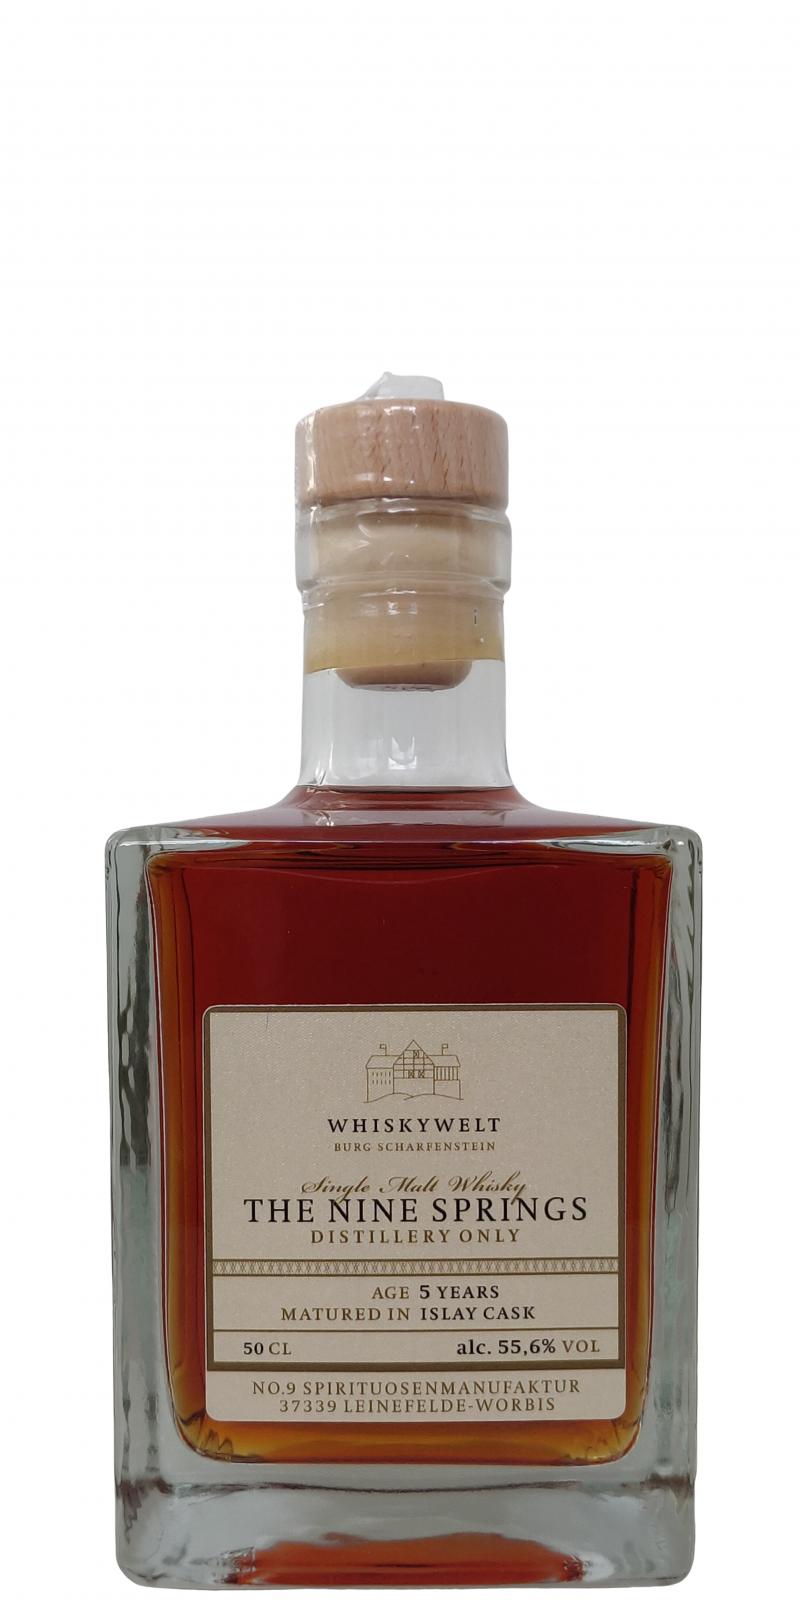 The Nine Springs 5yo Whiskywelt Burg Scharfenstein Islay Cask Distillery Only 55.6% 500ml